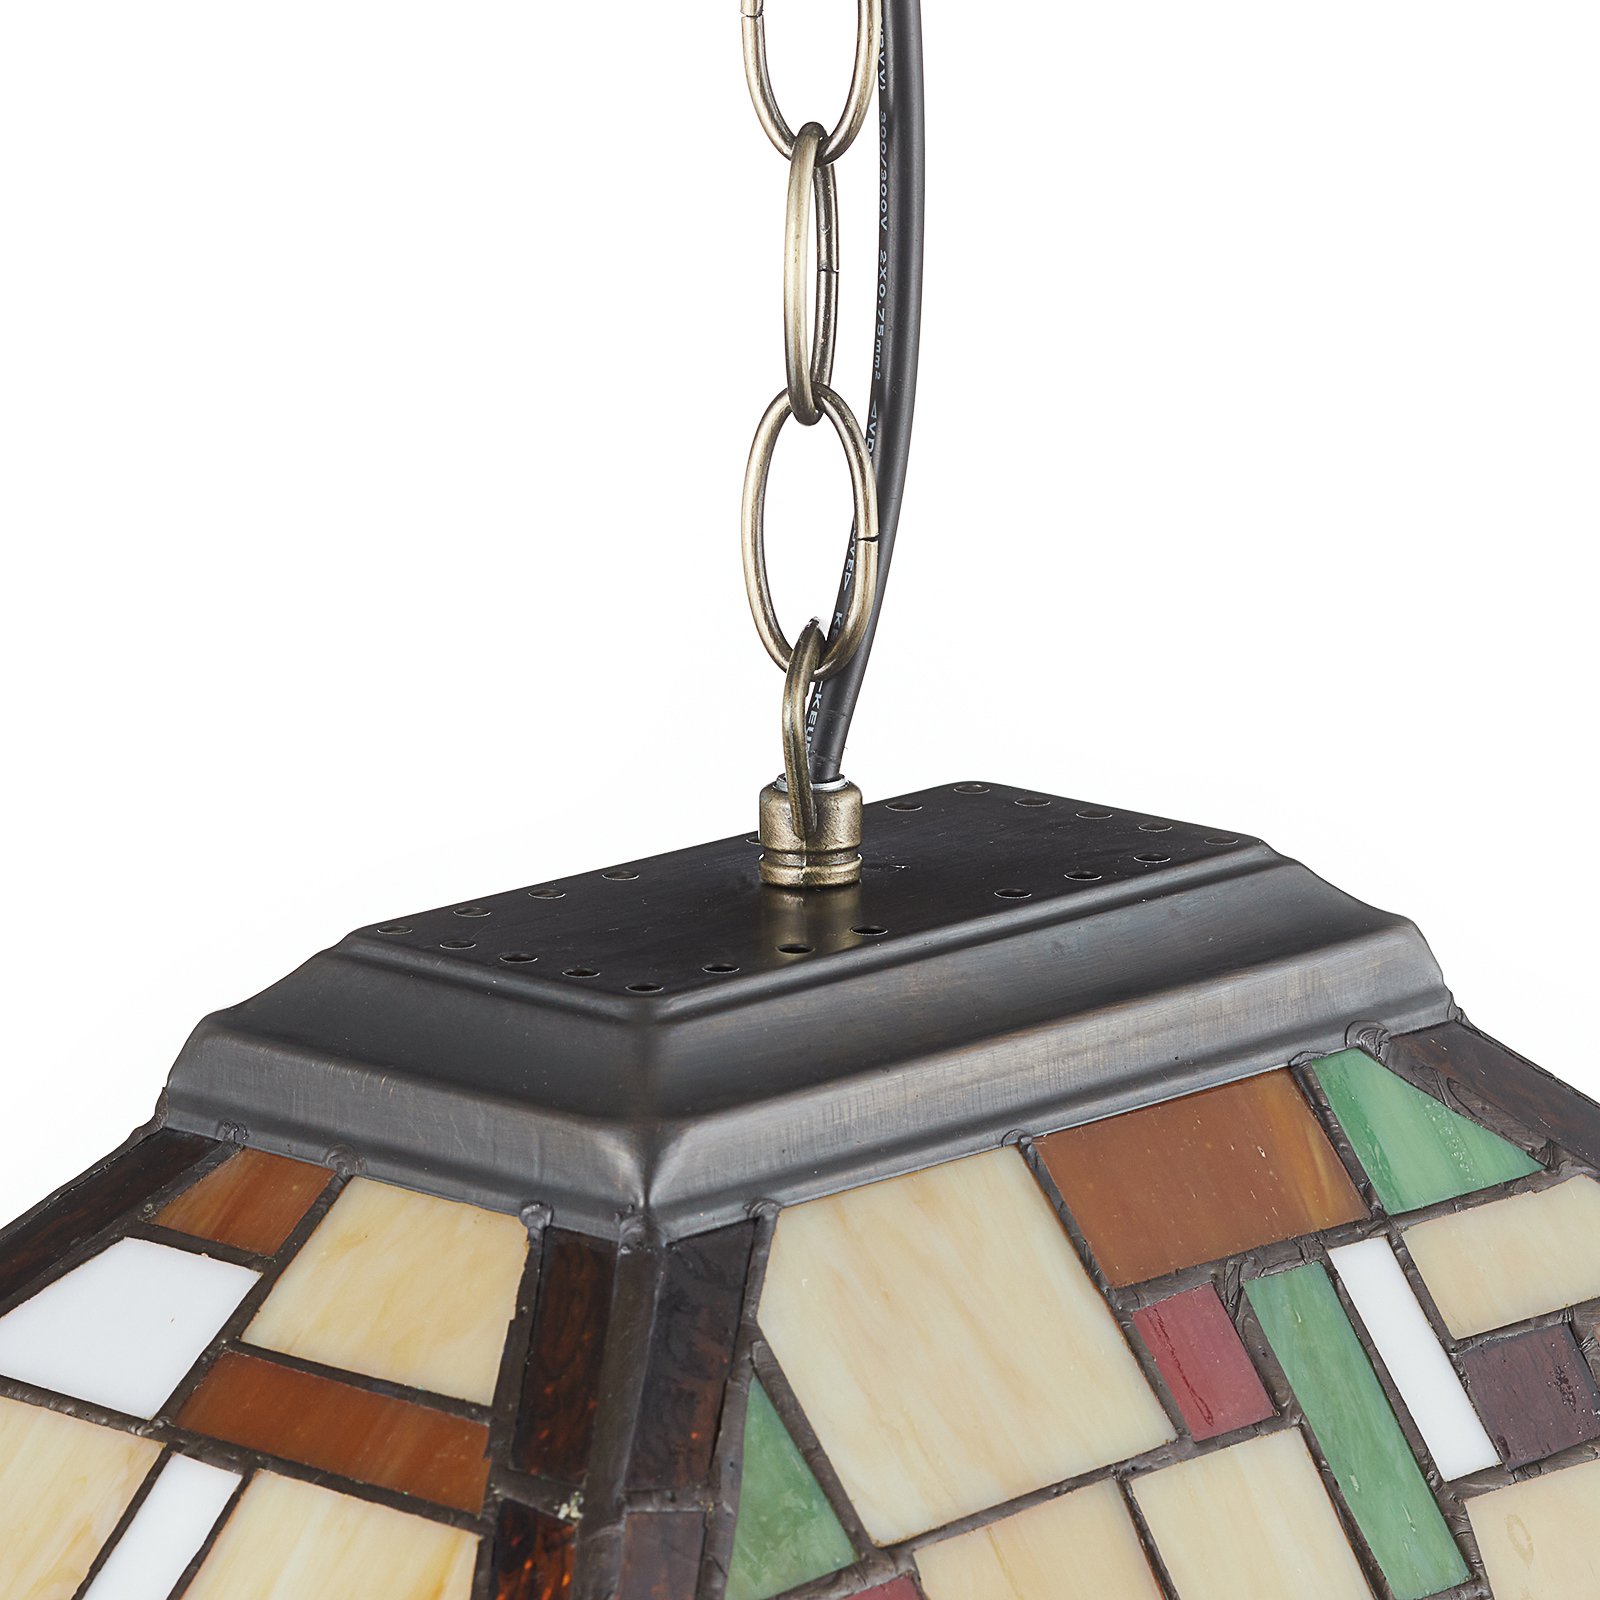 Mosaico hanglamp in Tiffany stijl